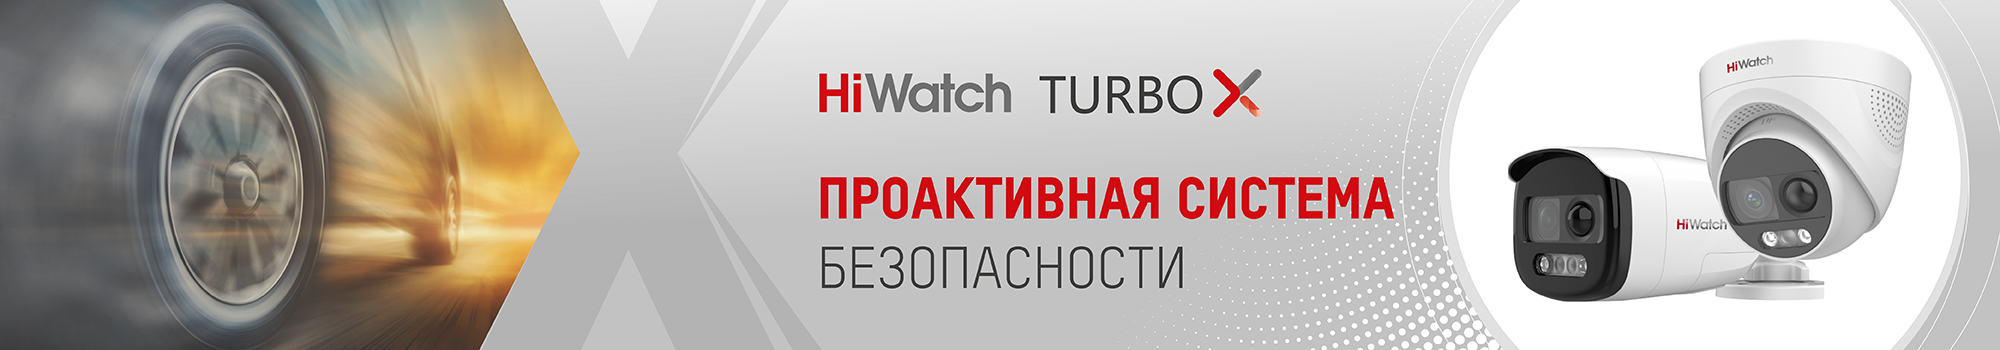 HiWatch TurboX Проактивная система безопасности